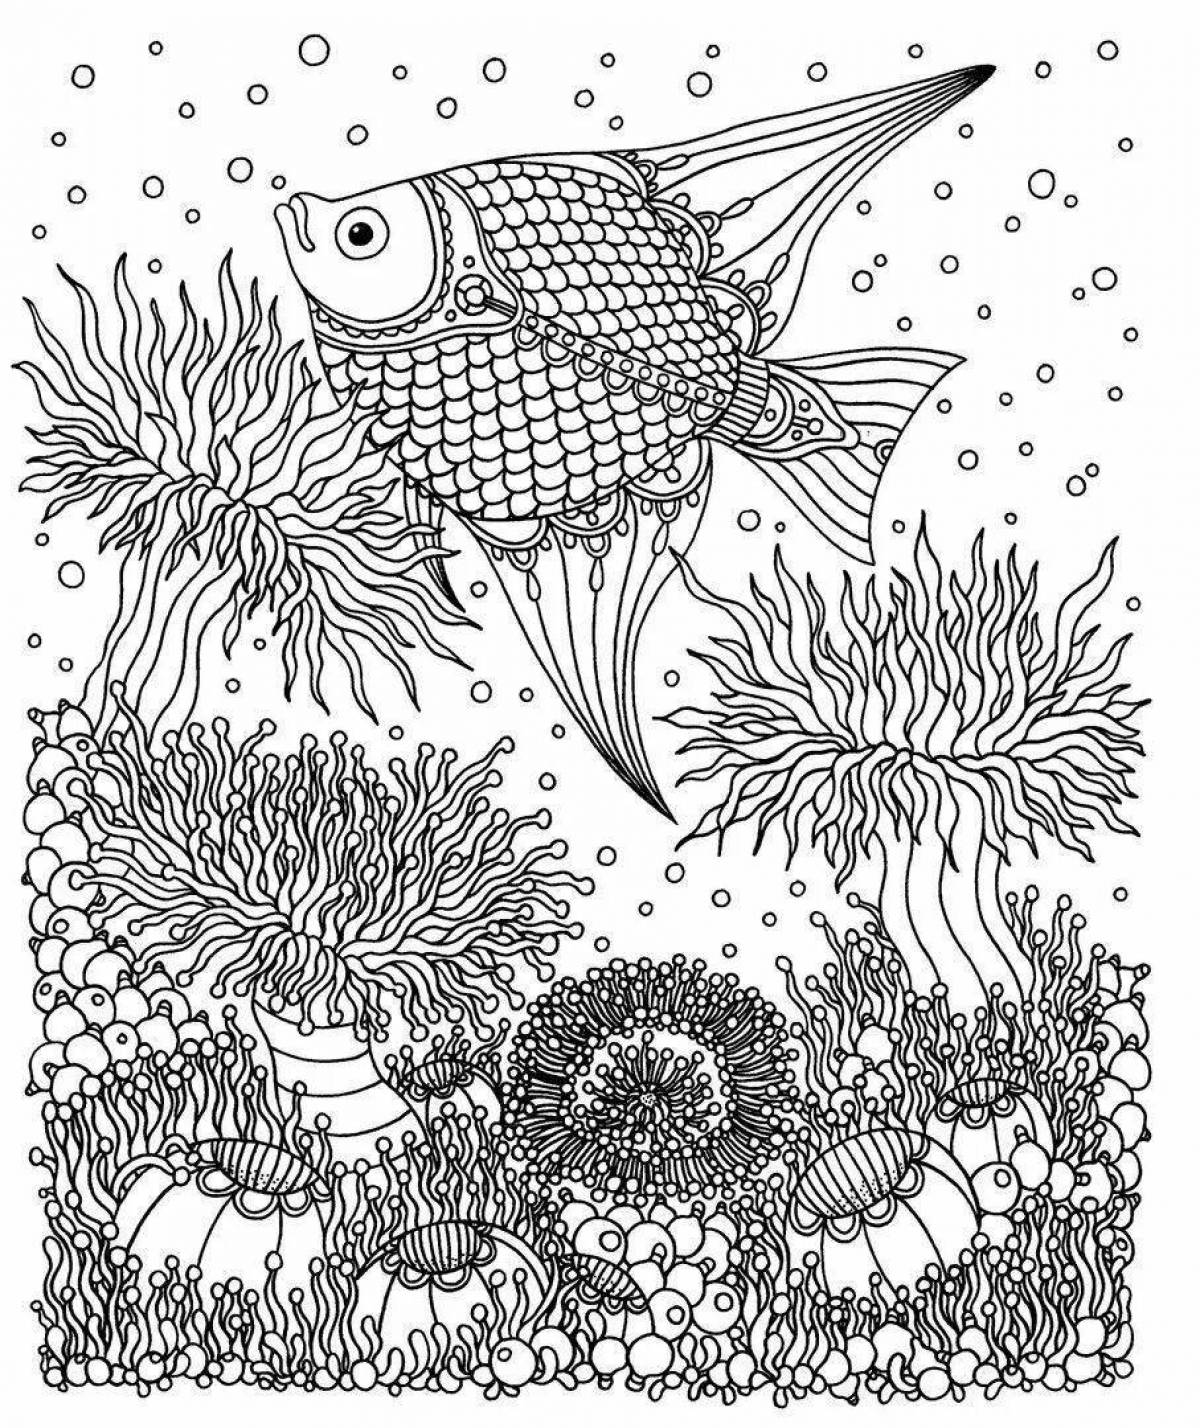 Beautiful anti-stress marine life coloring book